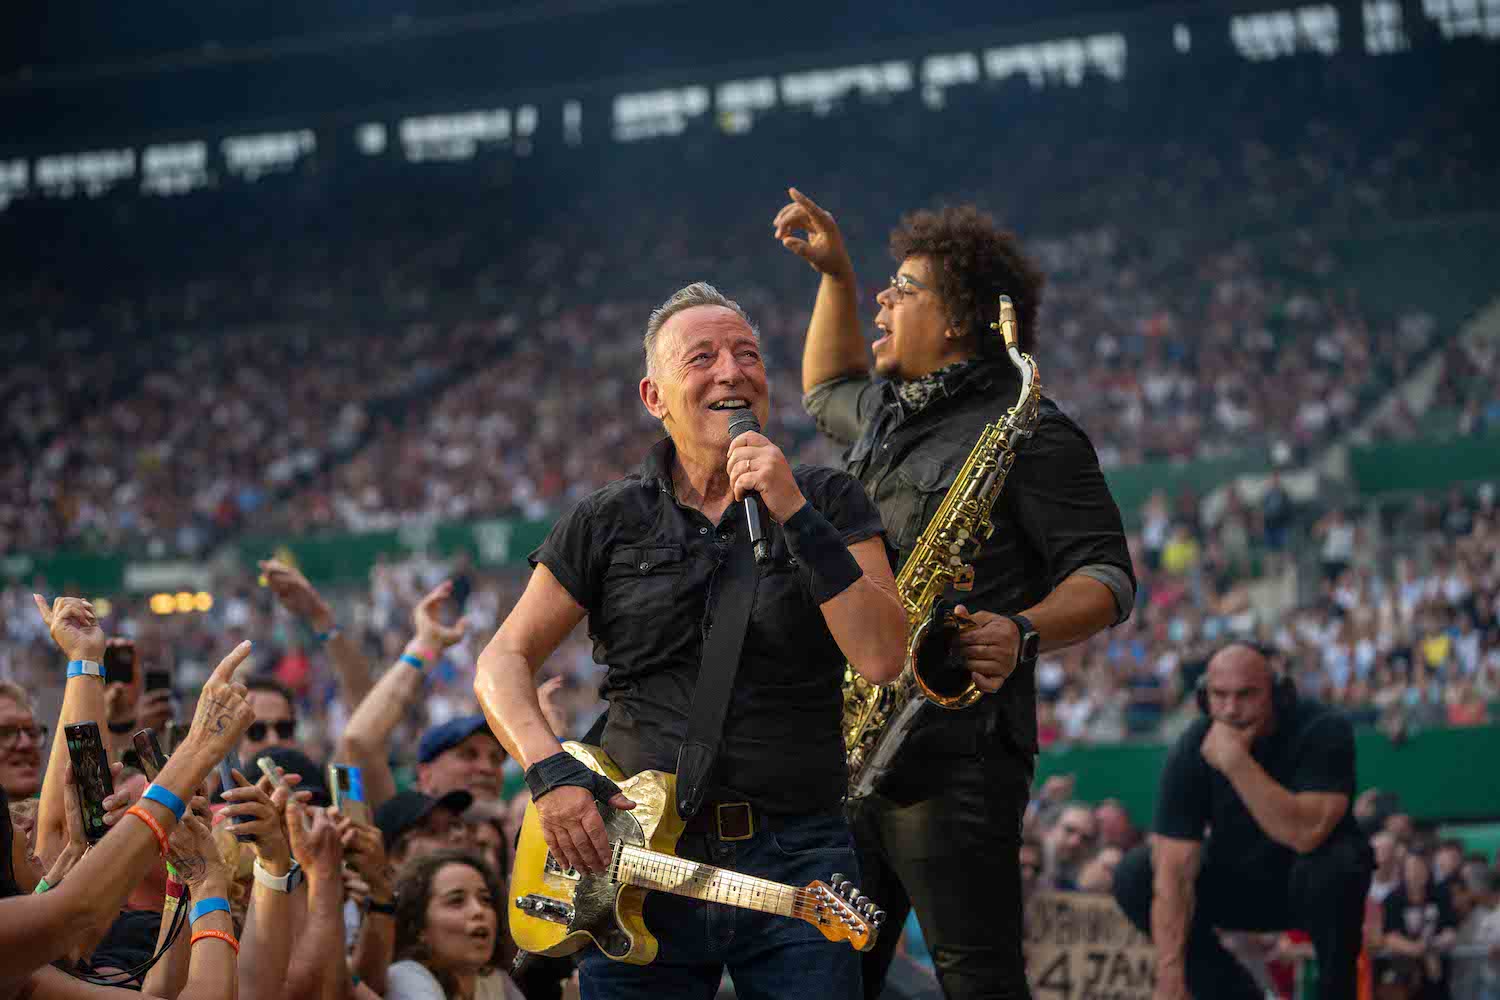 Bruce Springsteen & E Street Band at Ernst Happel Stadion, Vienna, Austria on July 18, 2023.